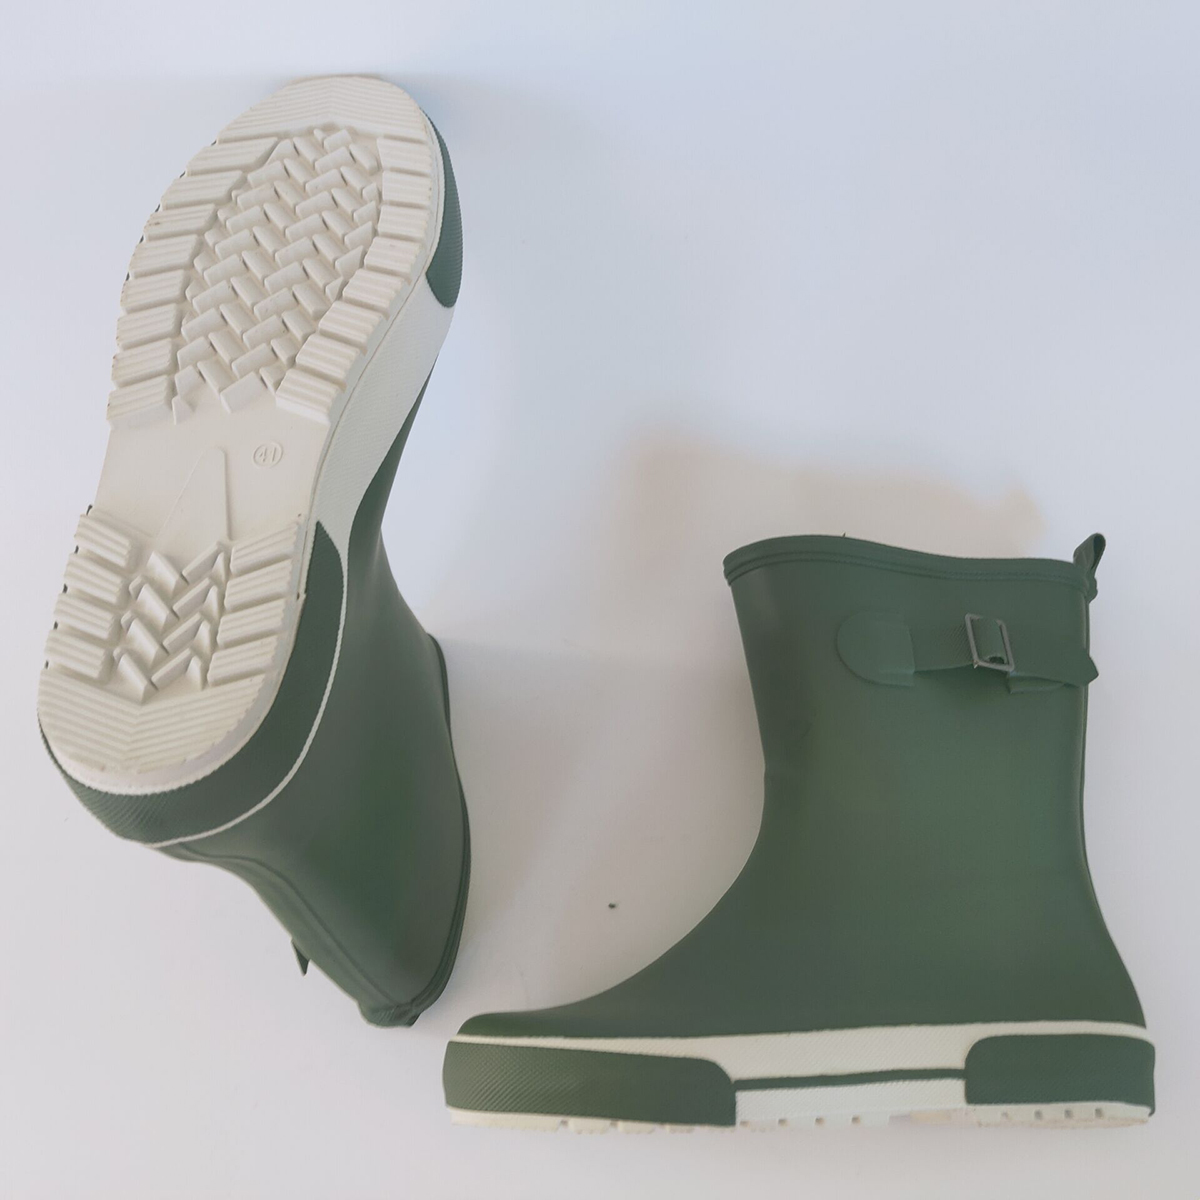 Rain Boots, Rubber Boots, Men's Rubber Rain Boots, Waterproof